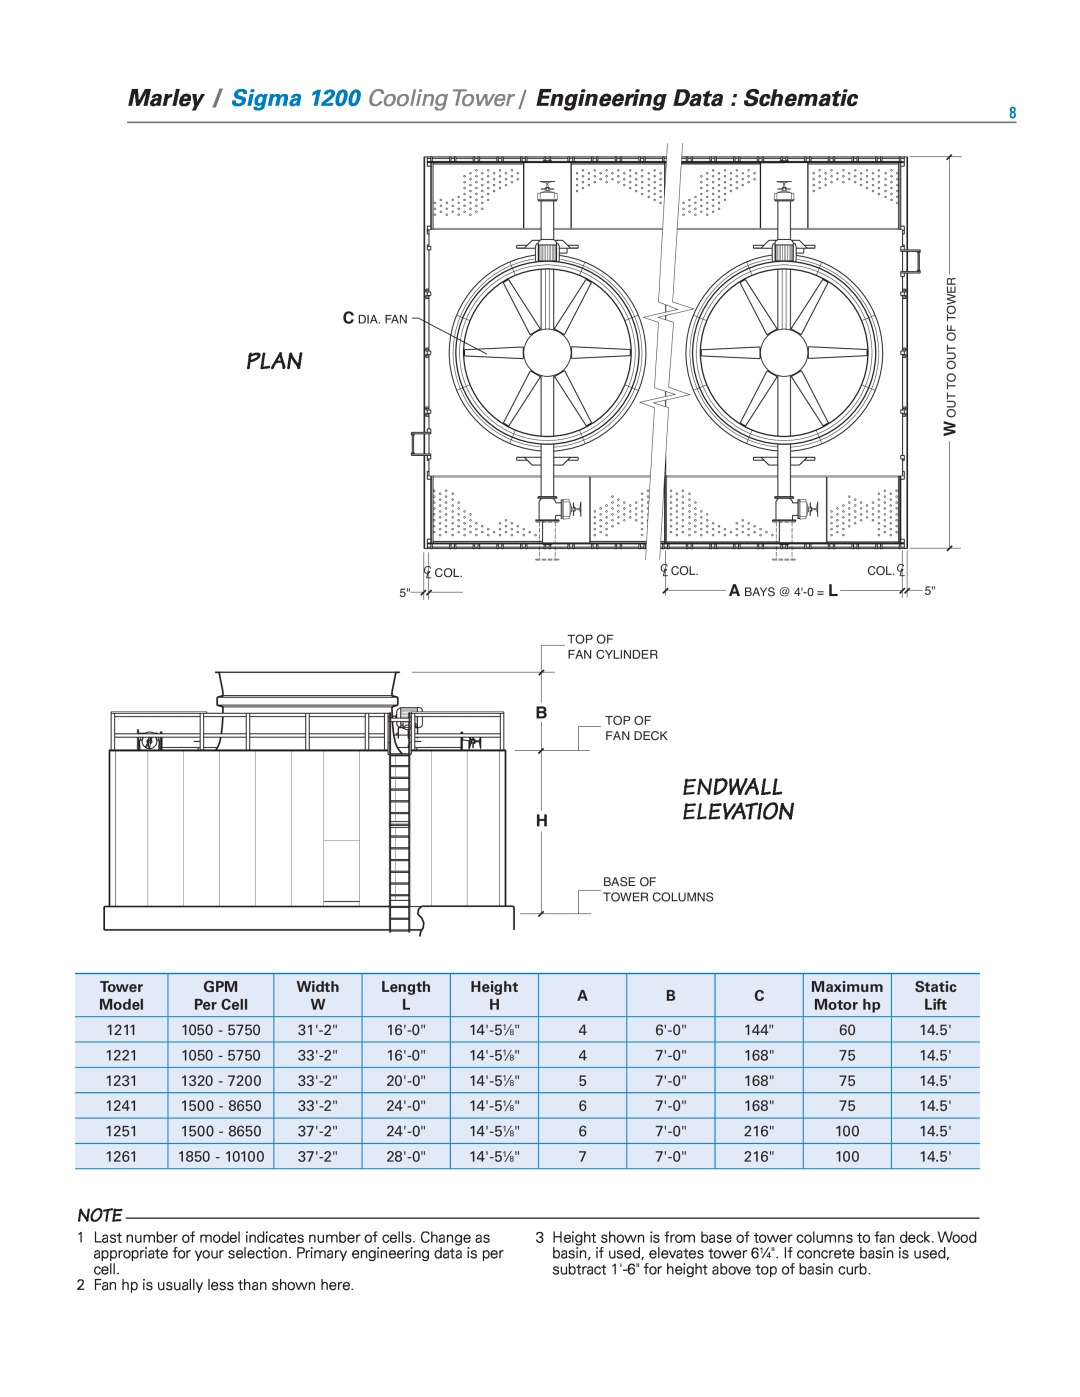 SPX Cooling Technologies 1200 Endwall HElevation, Plan, Tower, Width, Length, Height, Maximum, Static, Model, Motor hp 